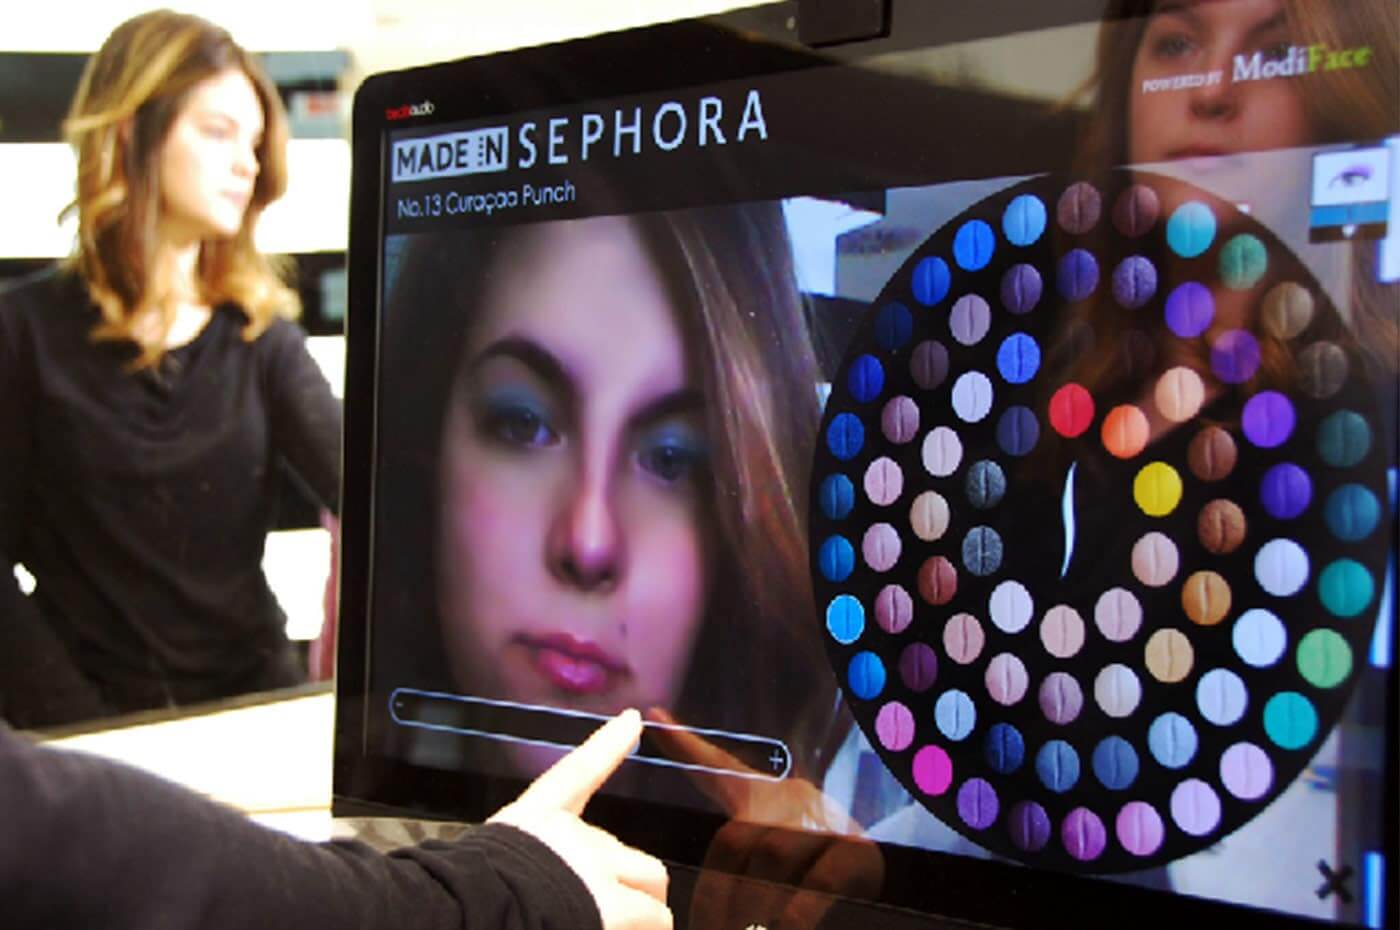 Sephora's augmented reality mirror